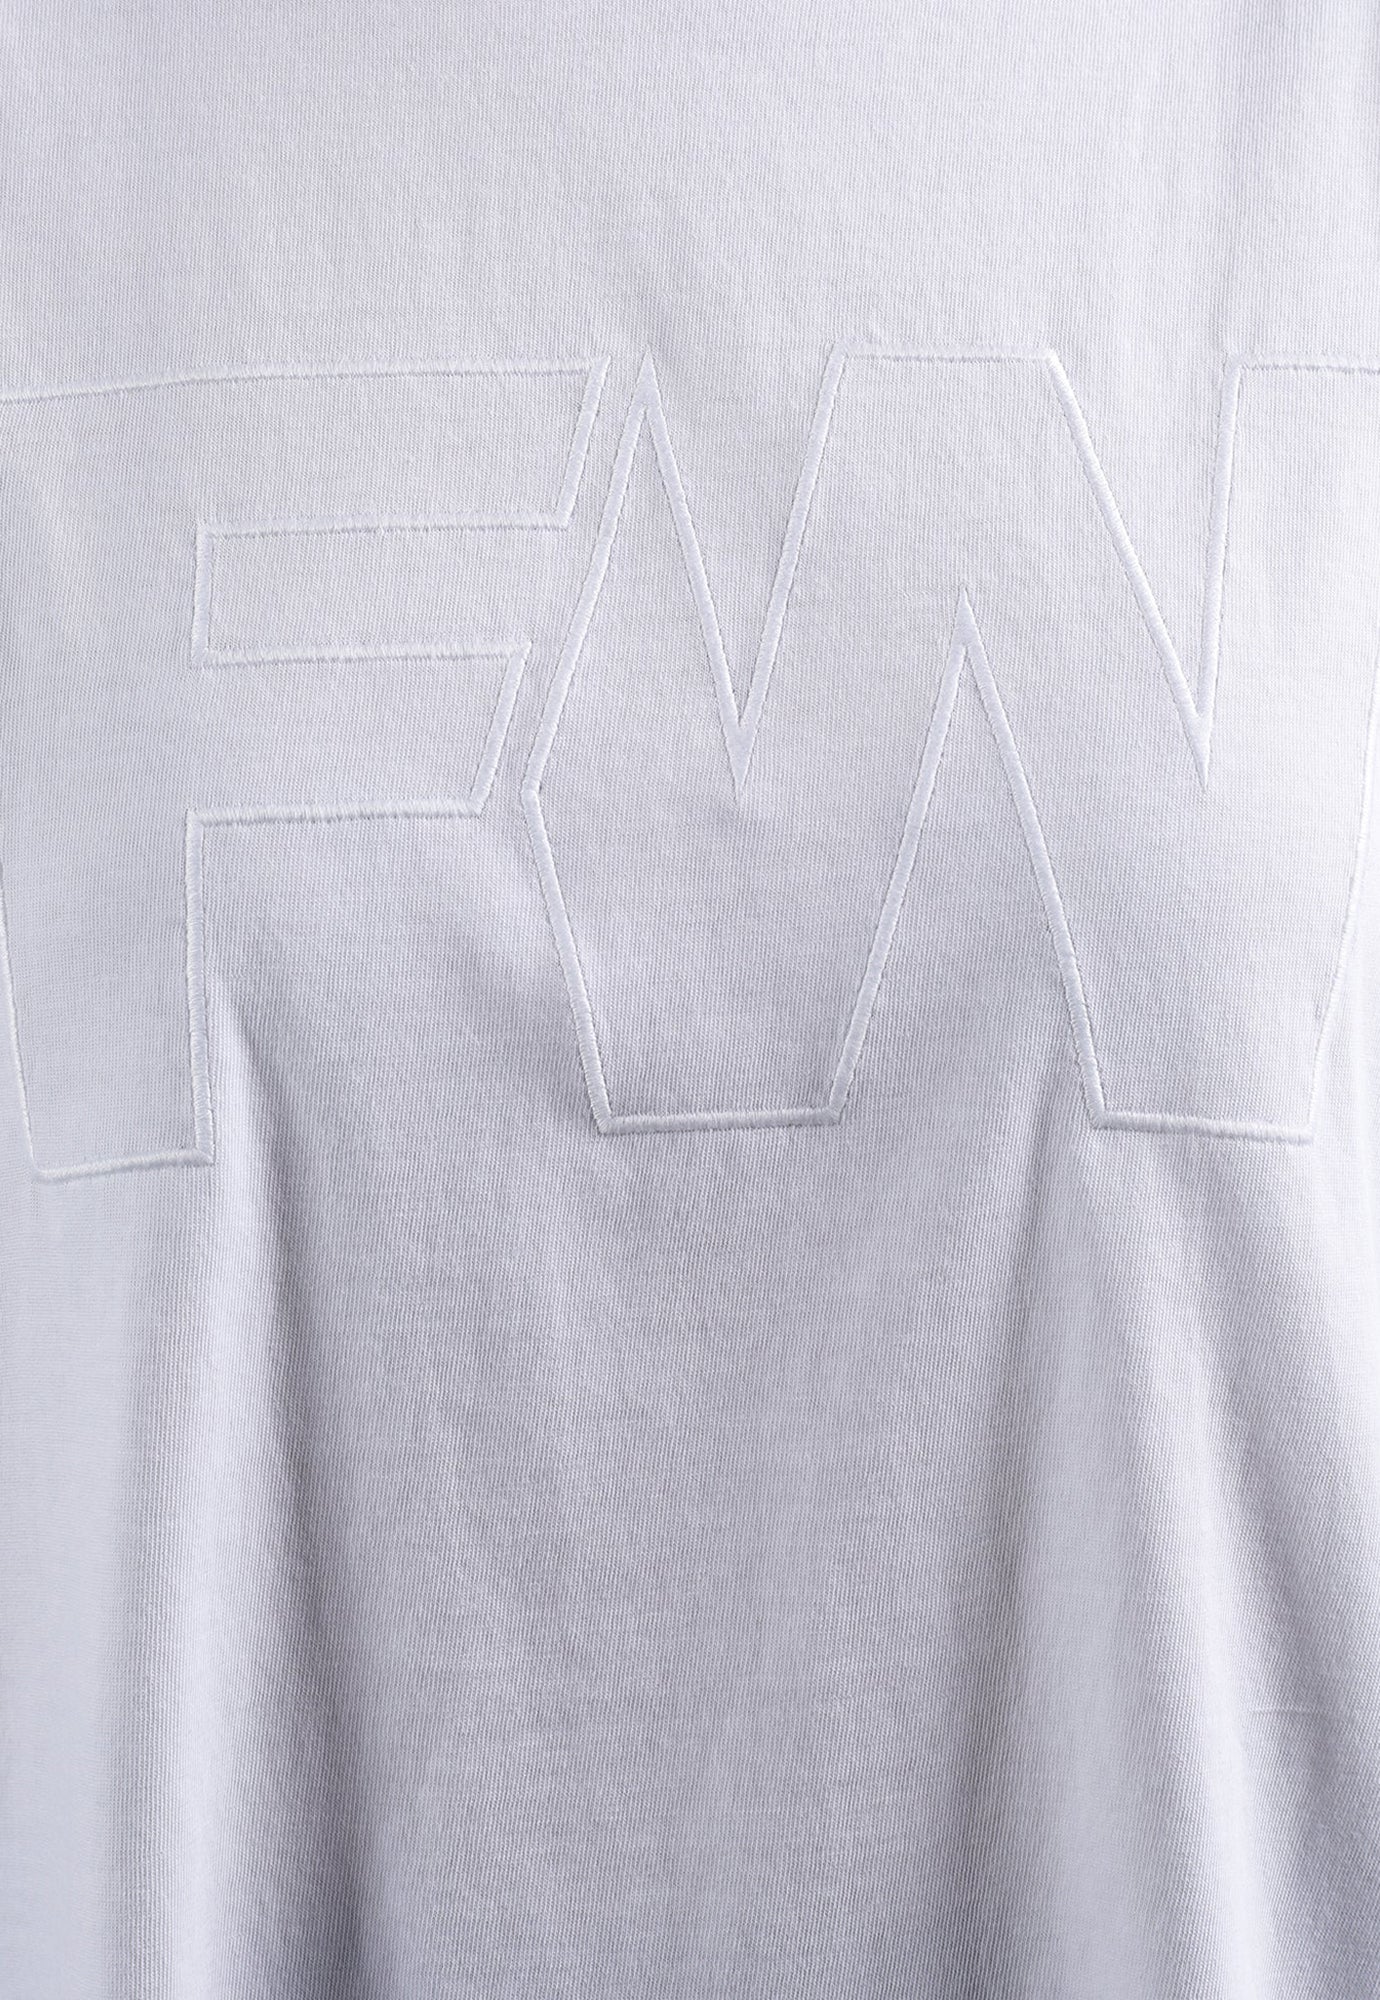 foxwood - embroidery tee - white